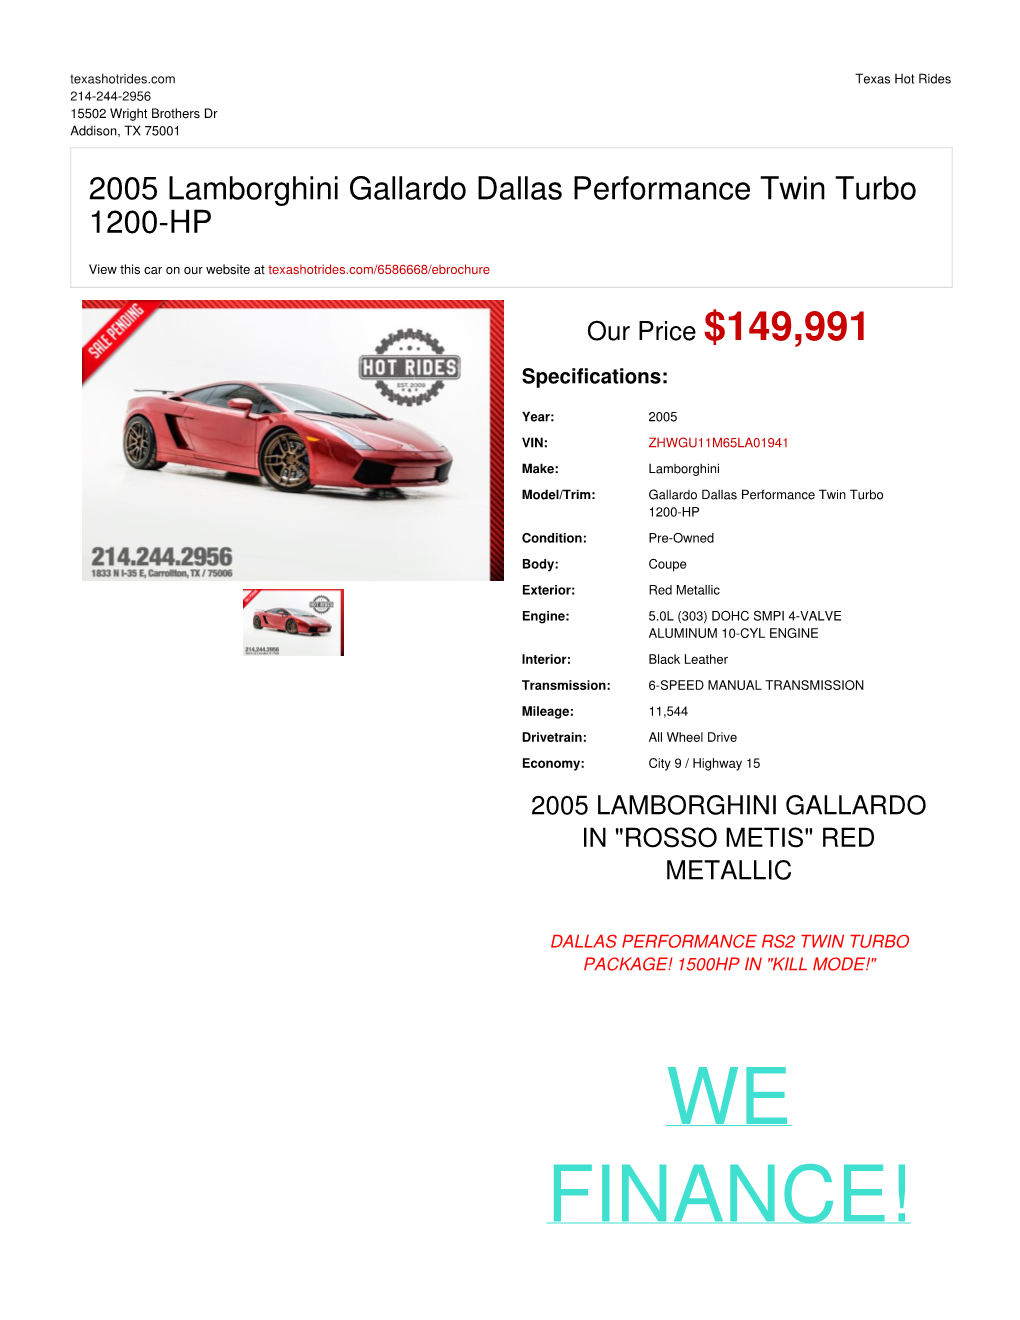 2005 Lamborghini Gallardo Dallas Performance Twin Turbo 1200-HP